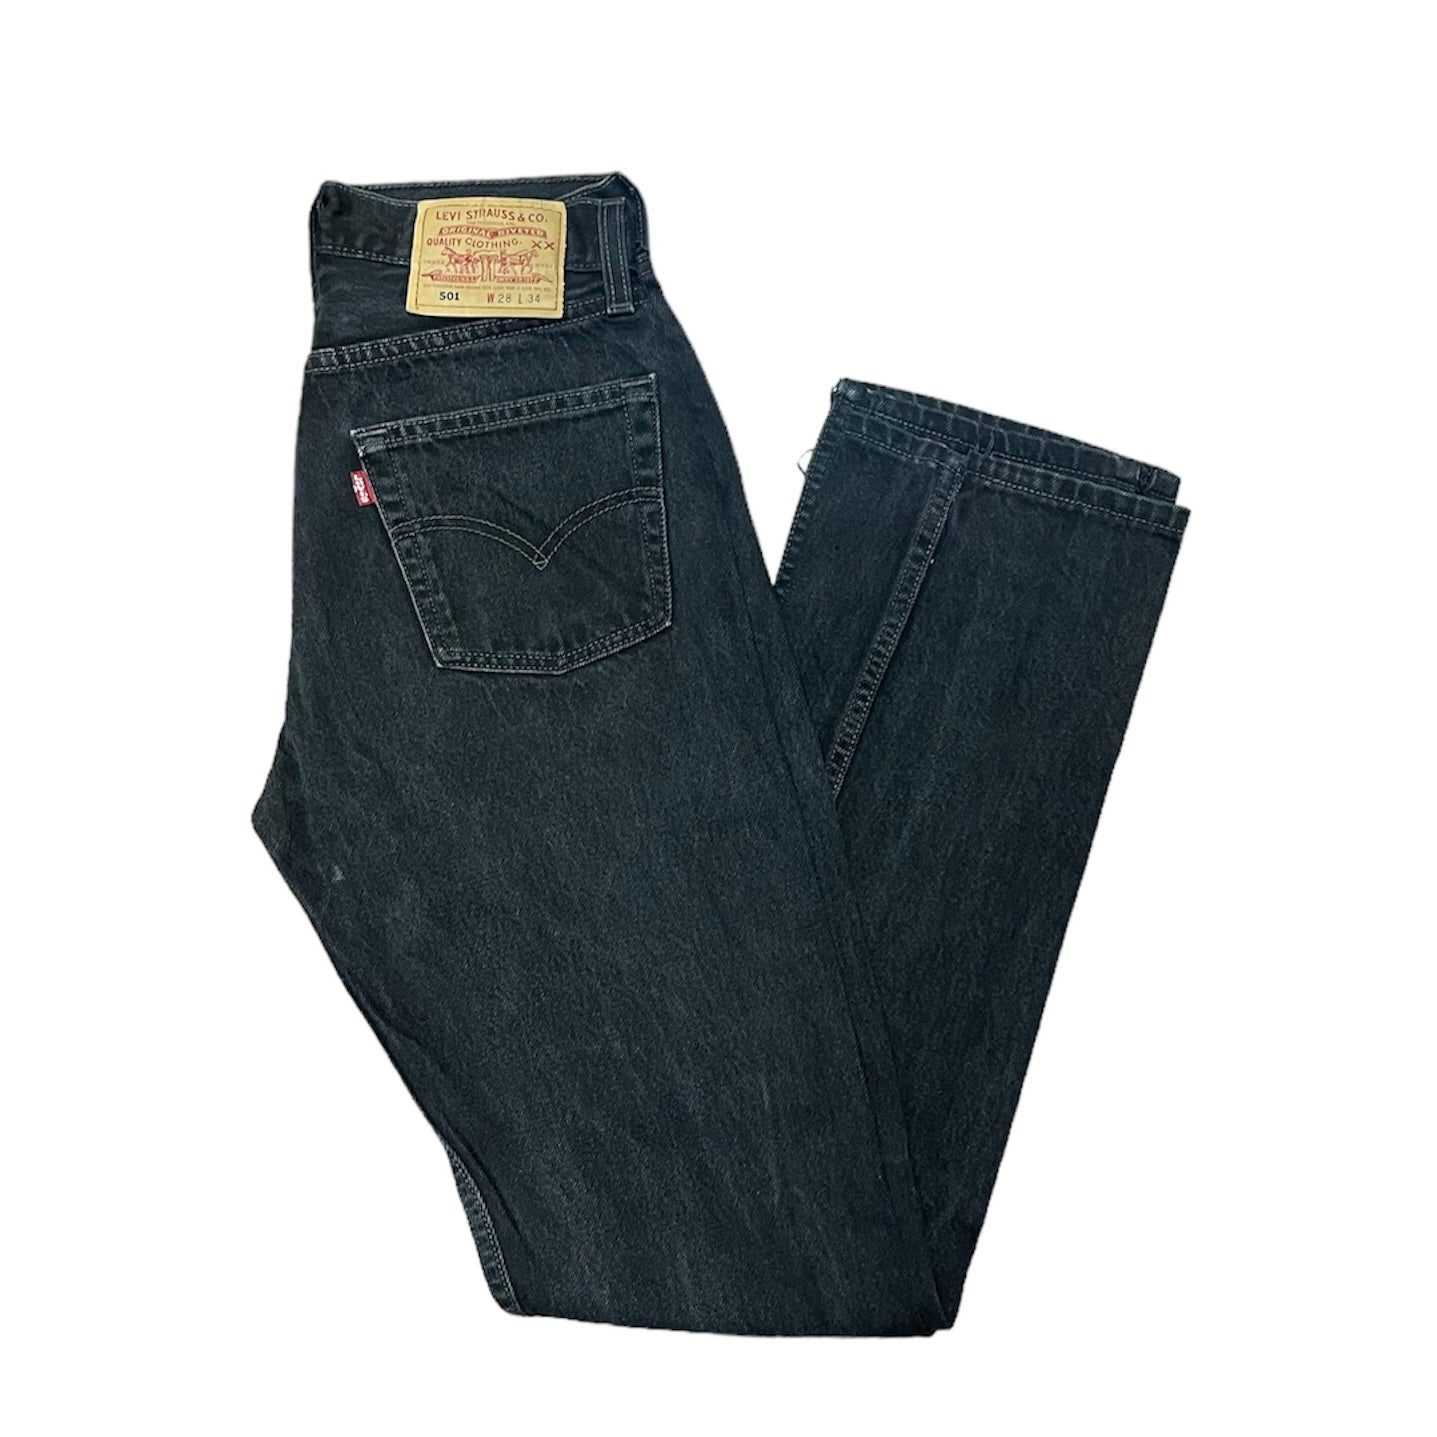 Vintage Levis 501 Black/Grey Jeans